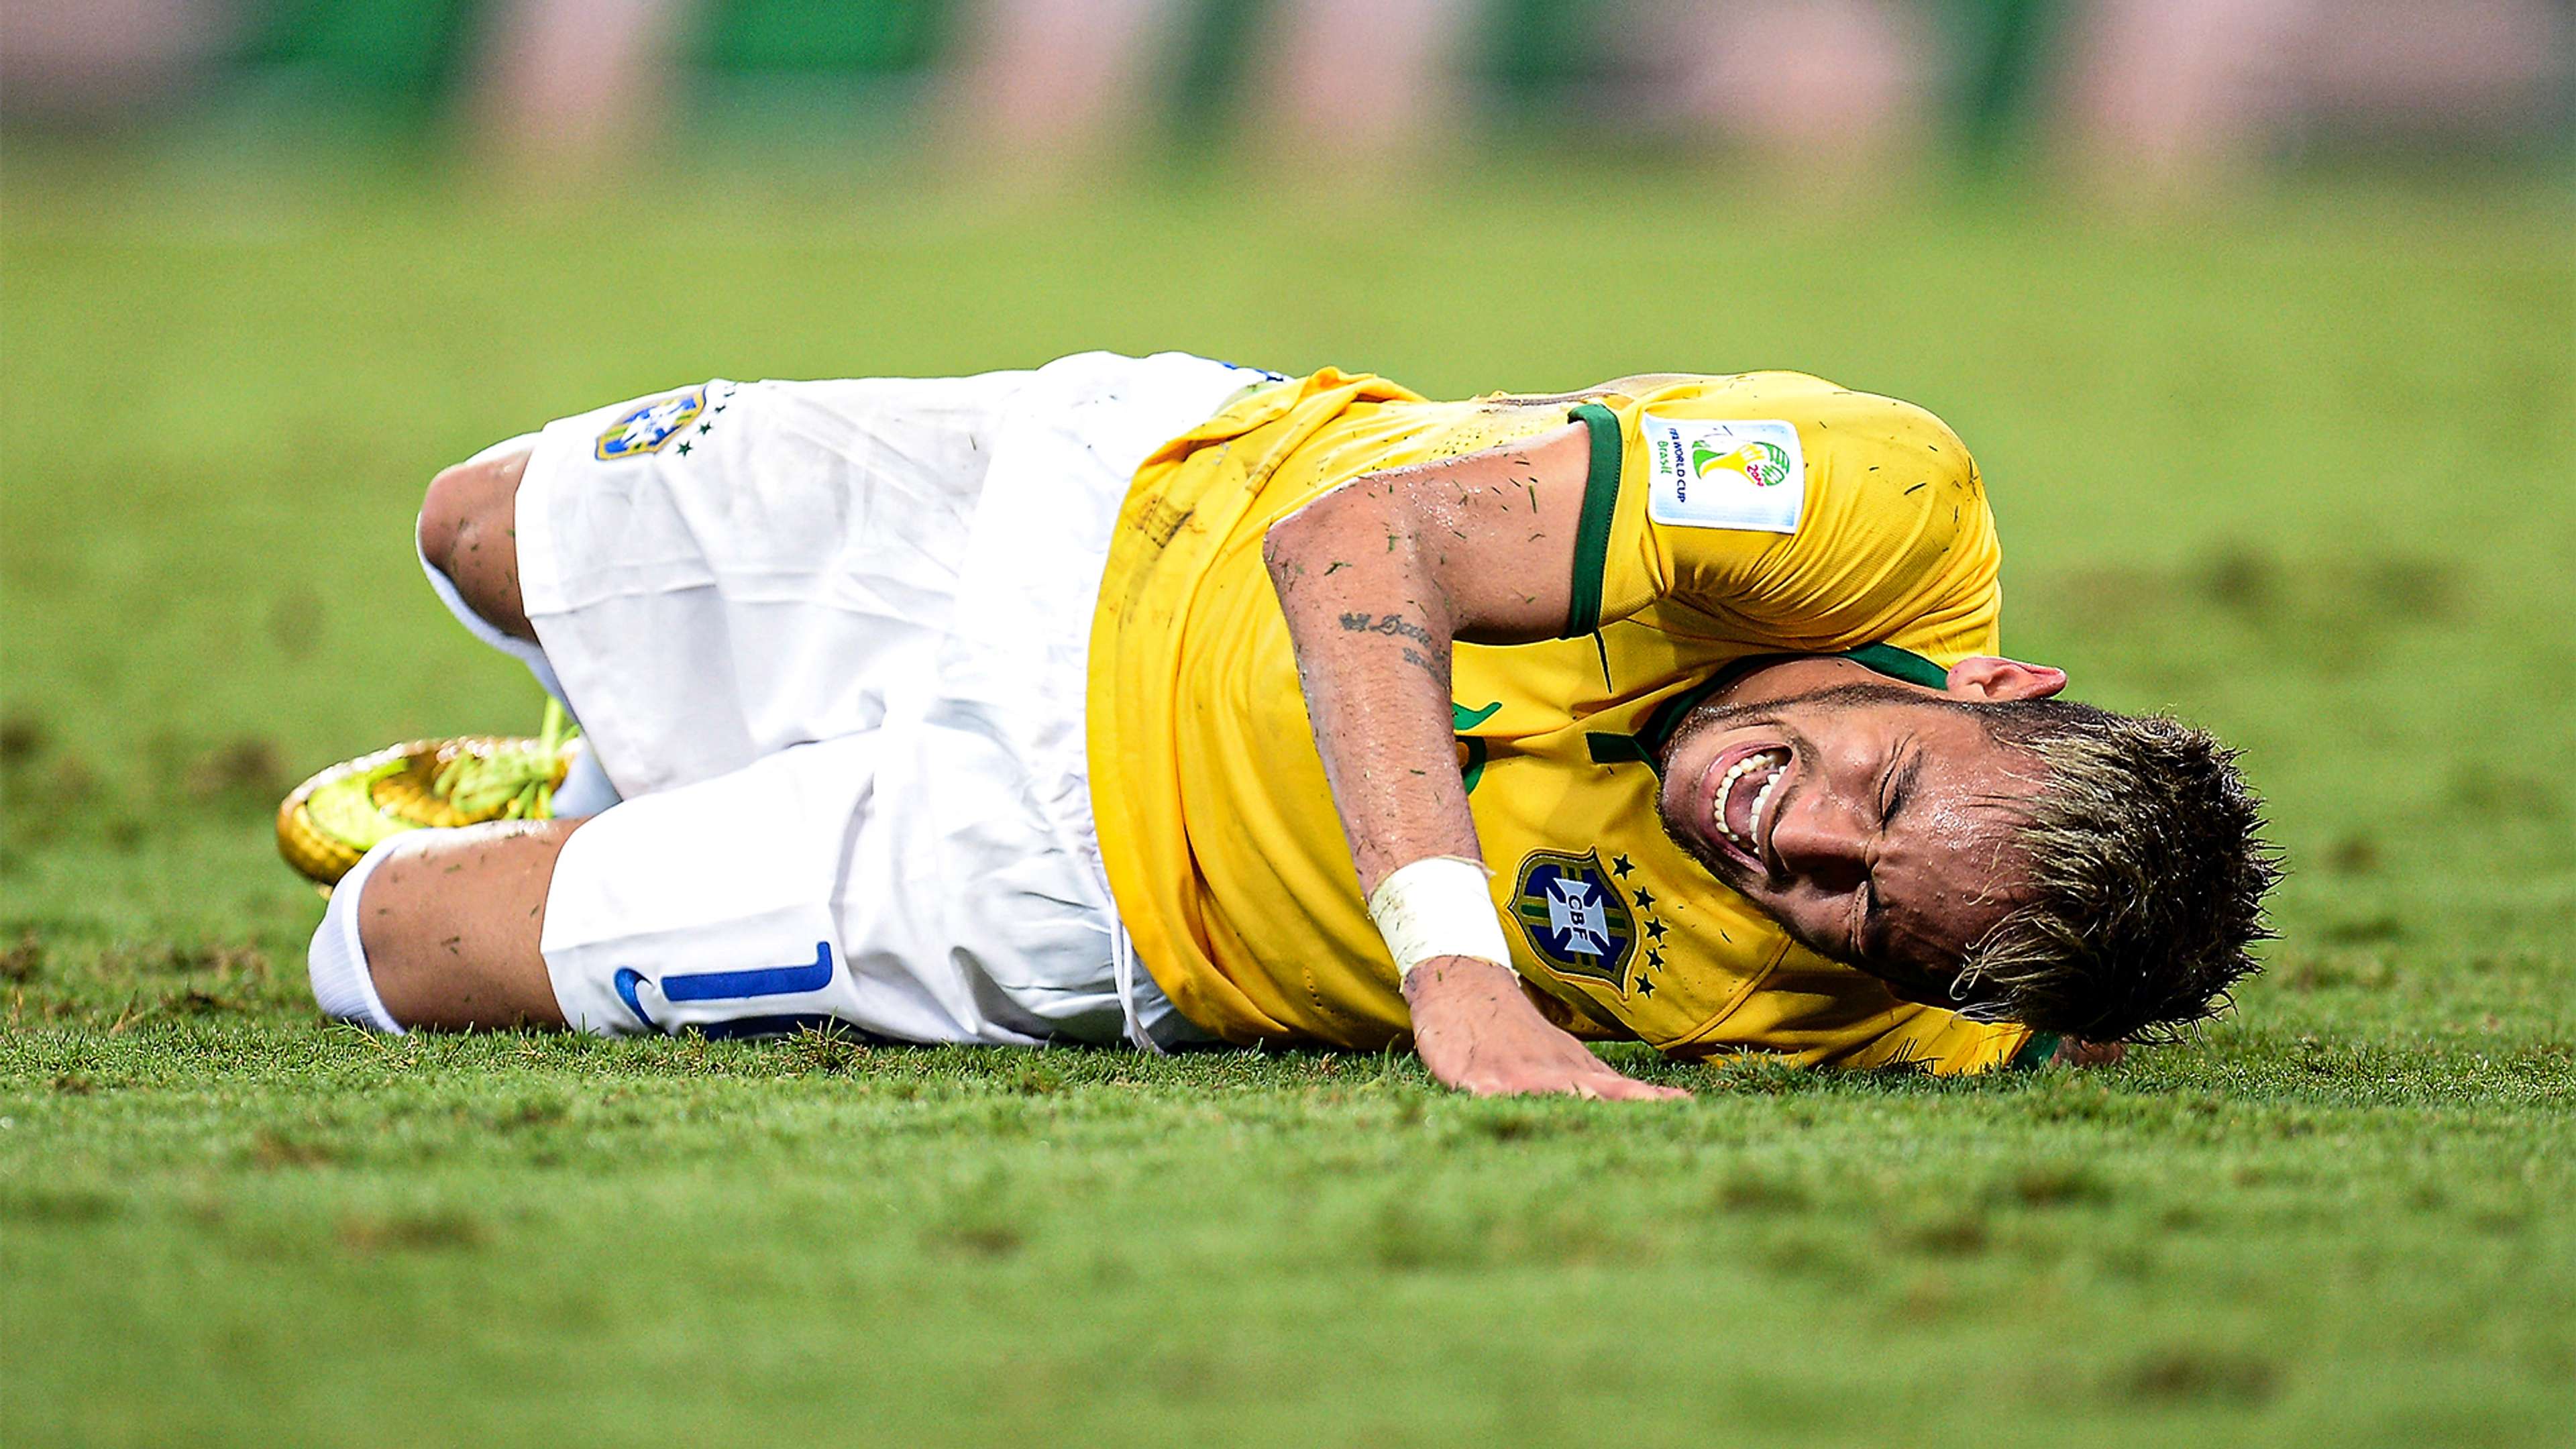 Neymar World Cup 2014 injury